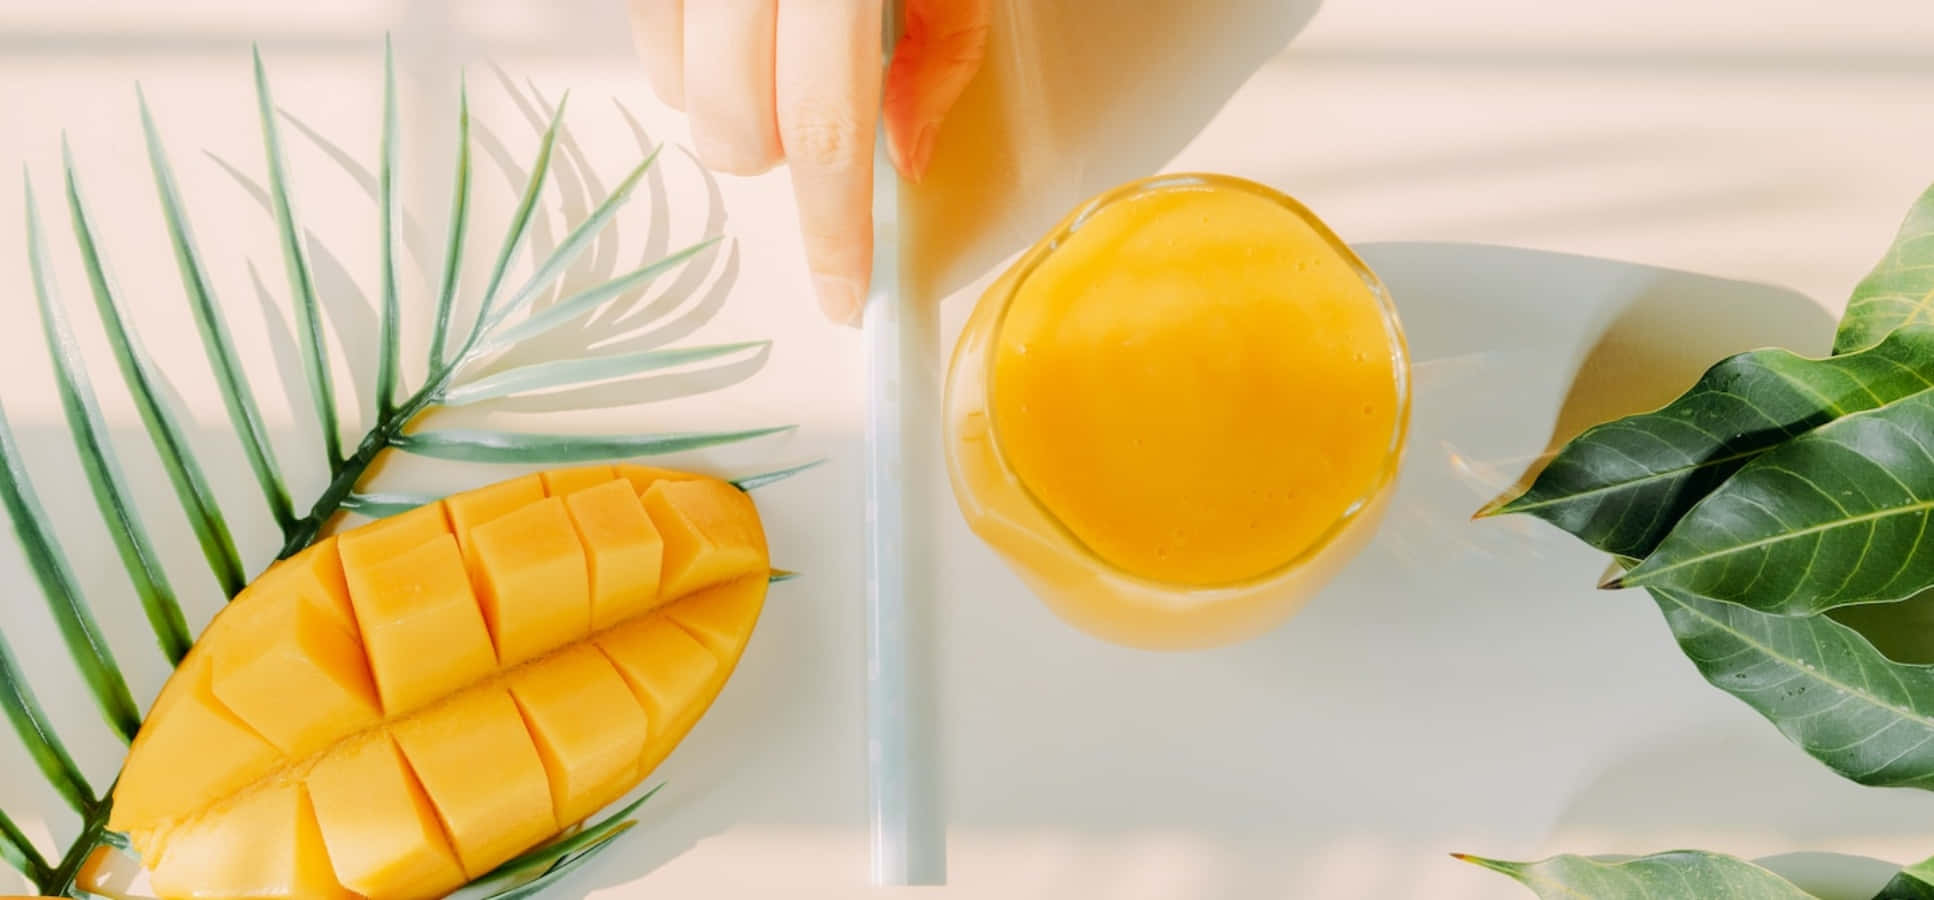 Sweet and juicy, enjoy a perfect Mango!